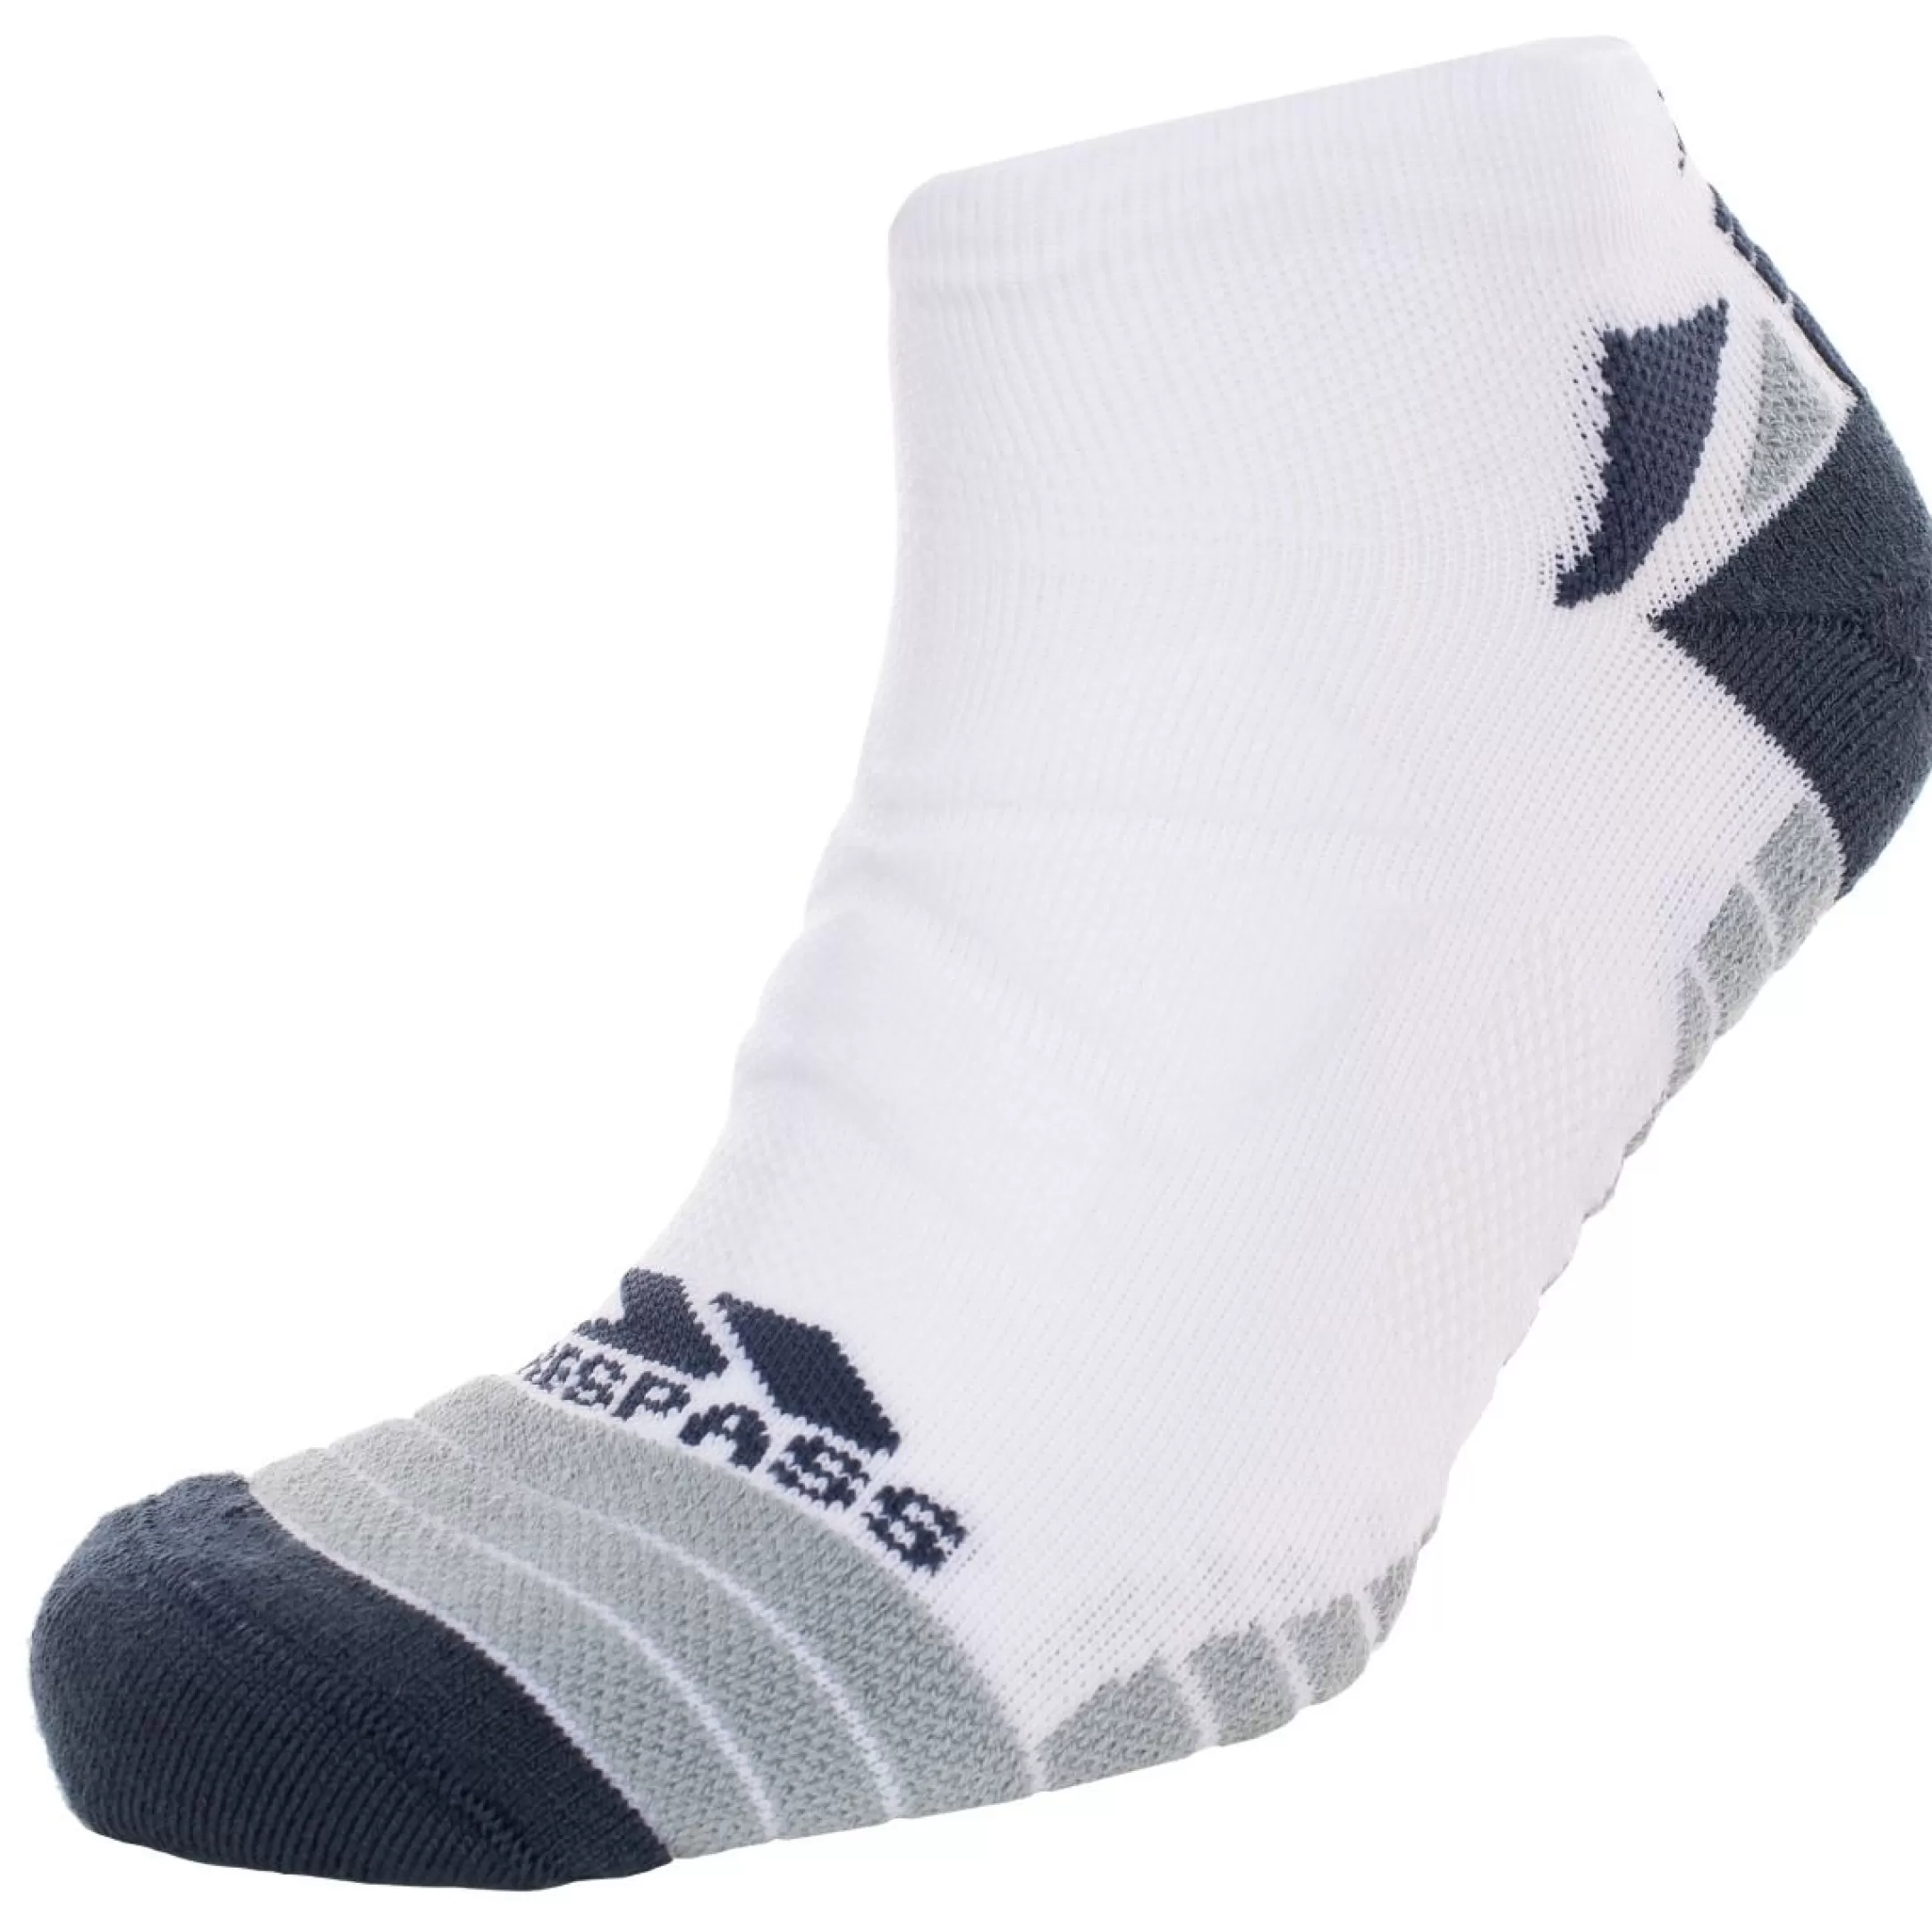 Unisex Trainer Socks Compression Elevation | Trespass New